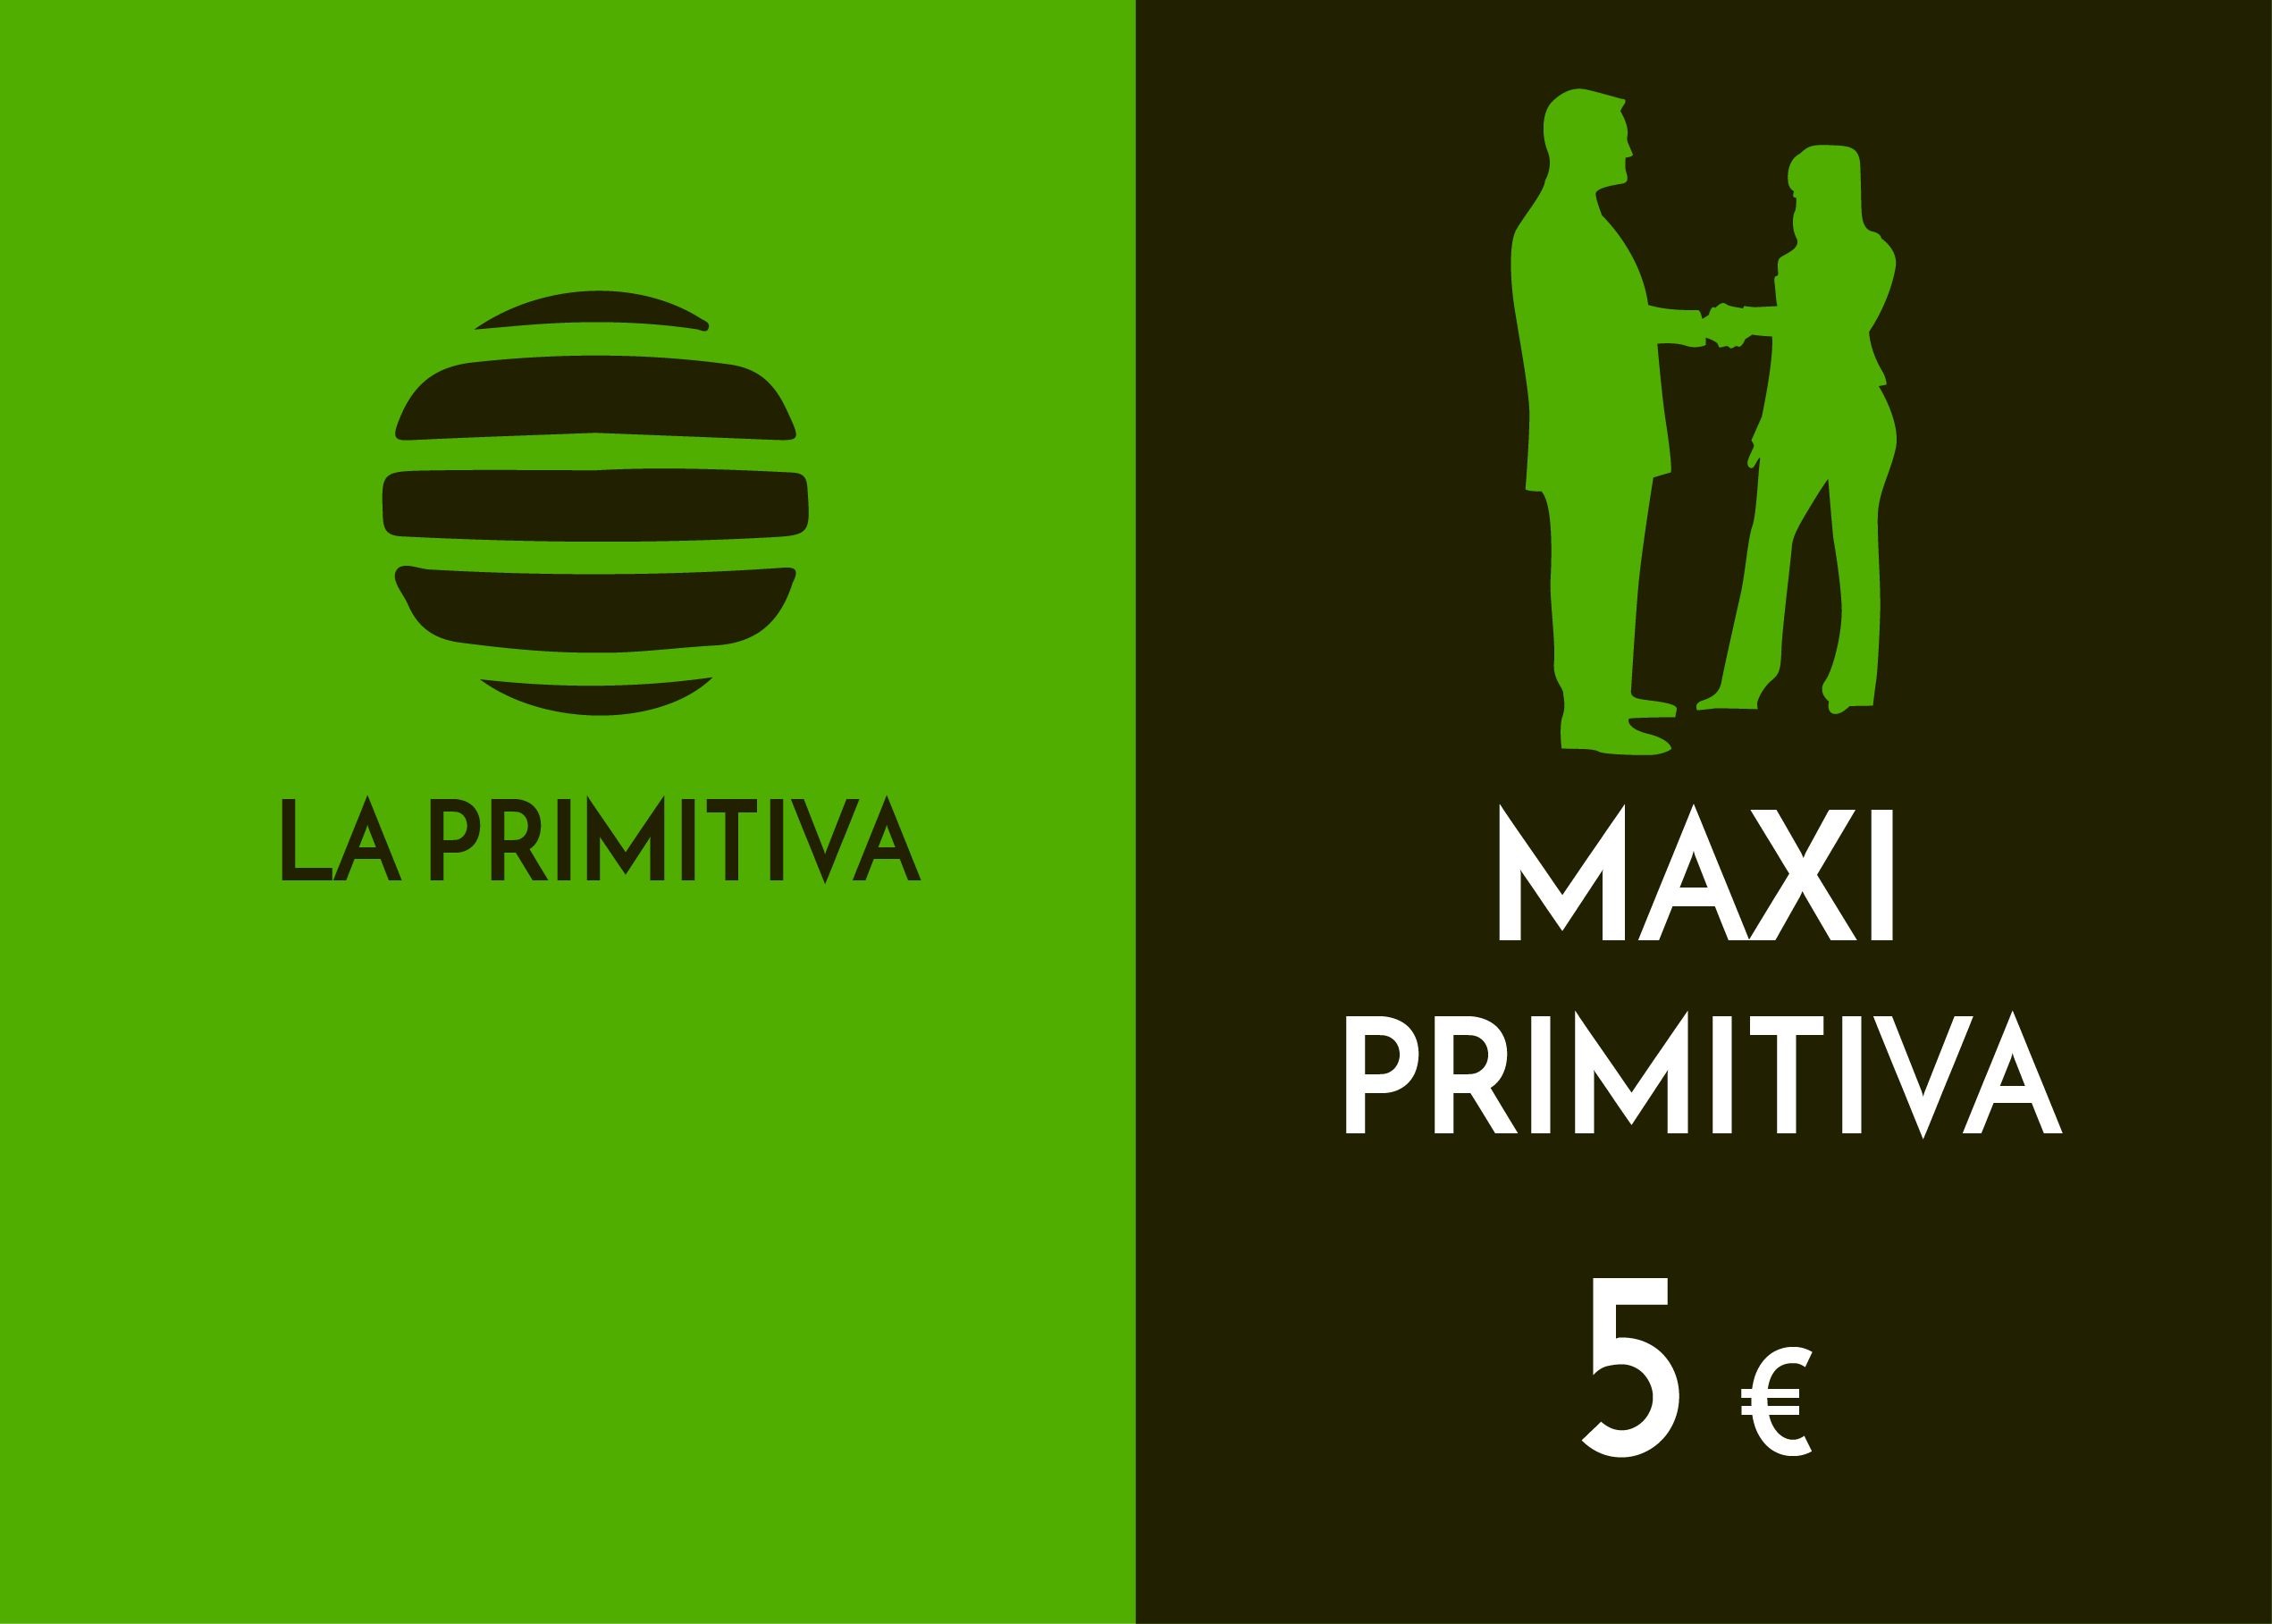 Pea - maxiprimitiva - 5,00 Euros